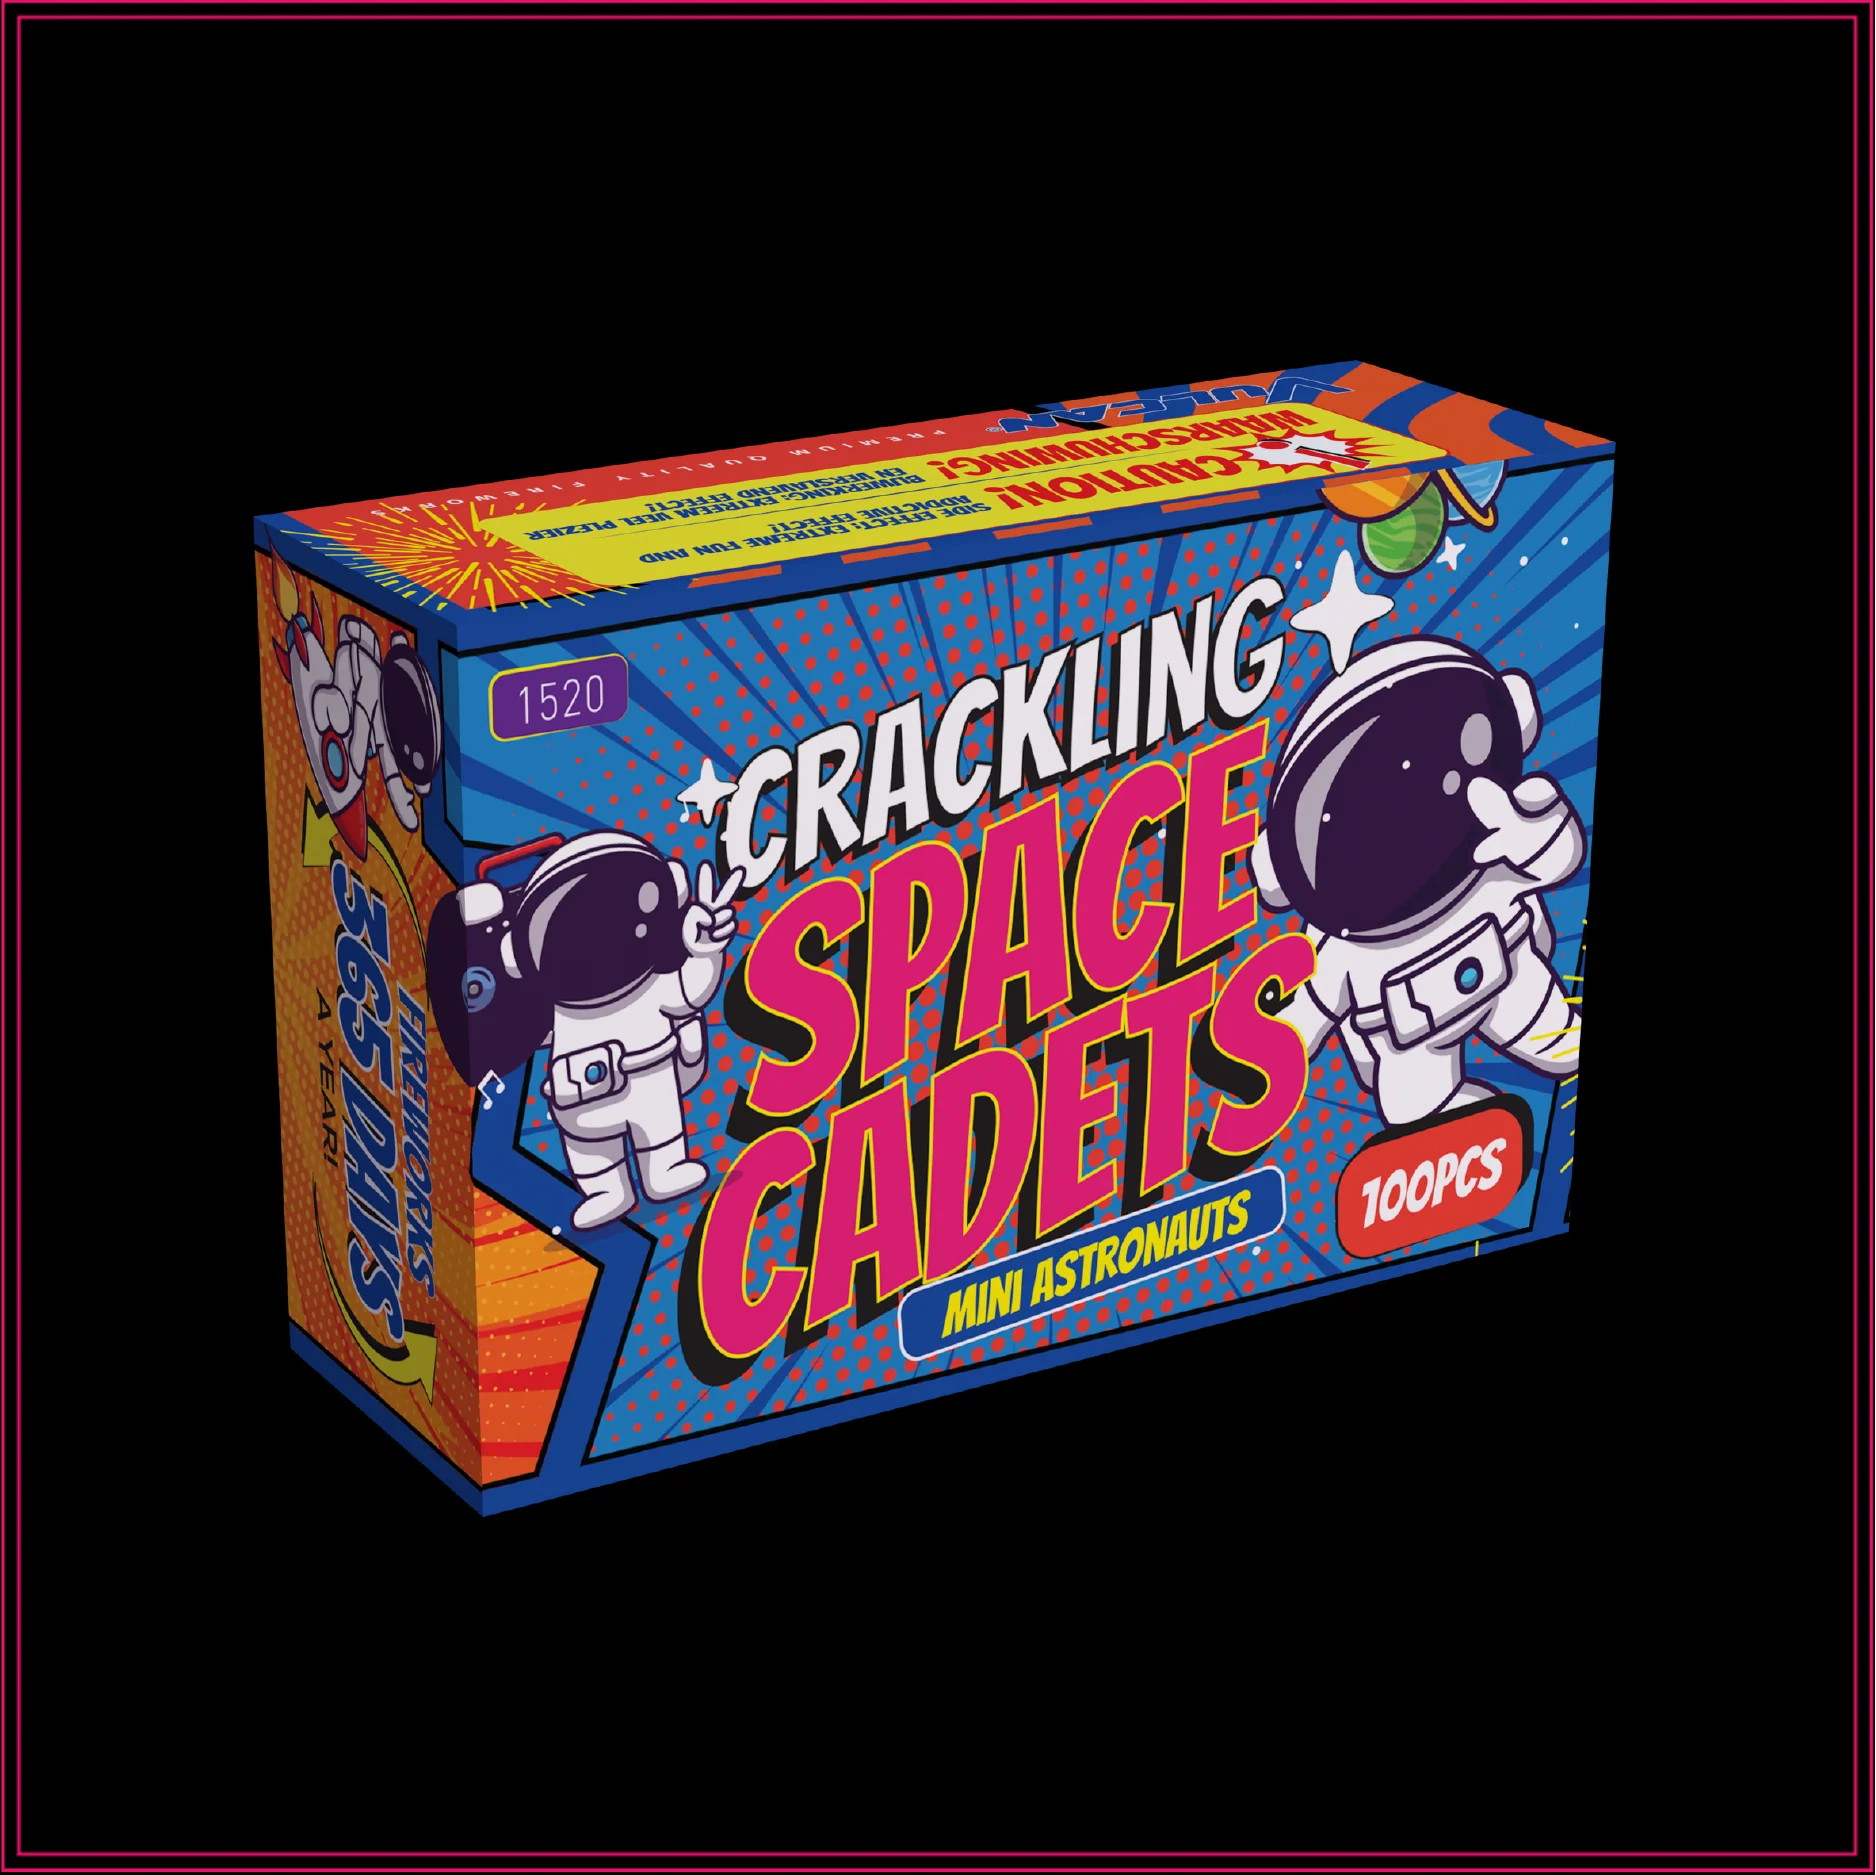 Space Cadets (mini-astronaut)